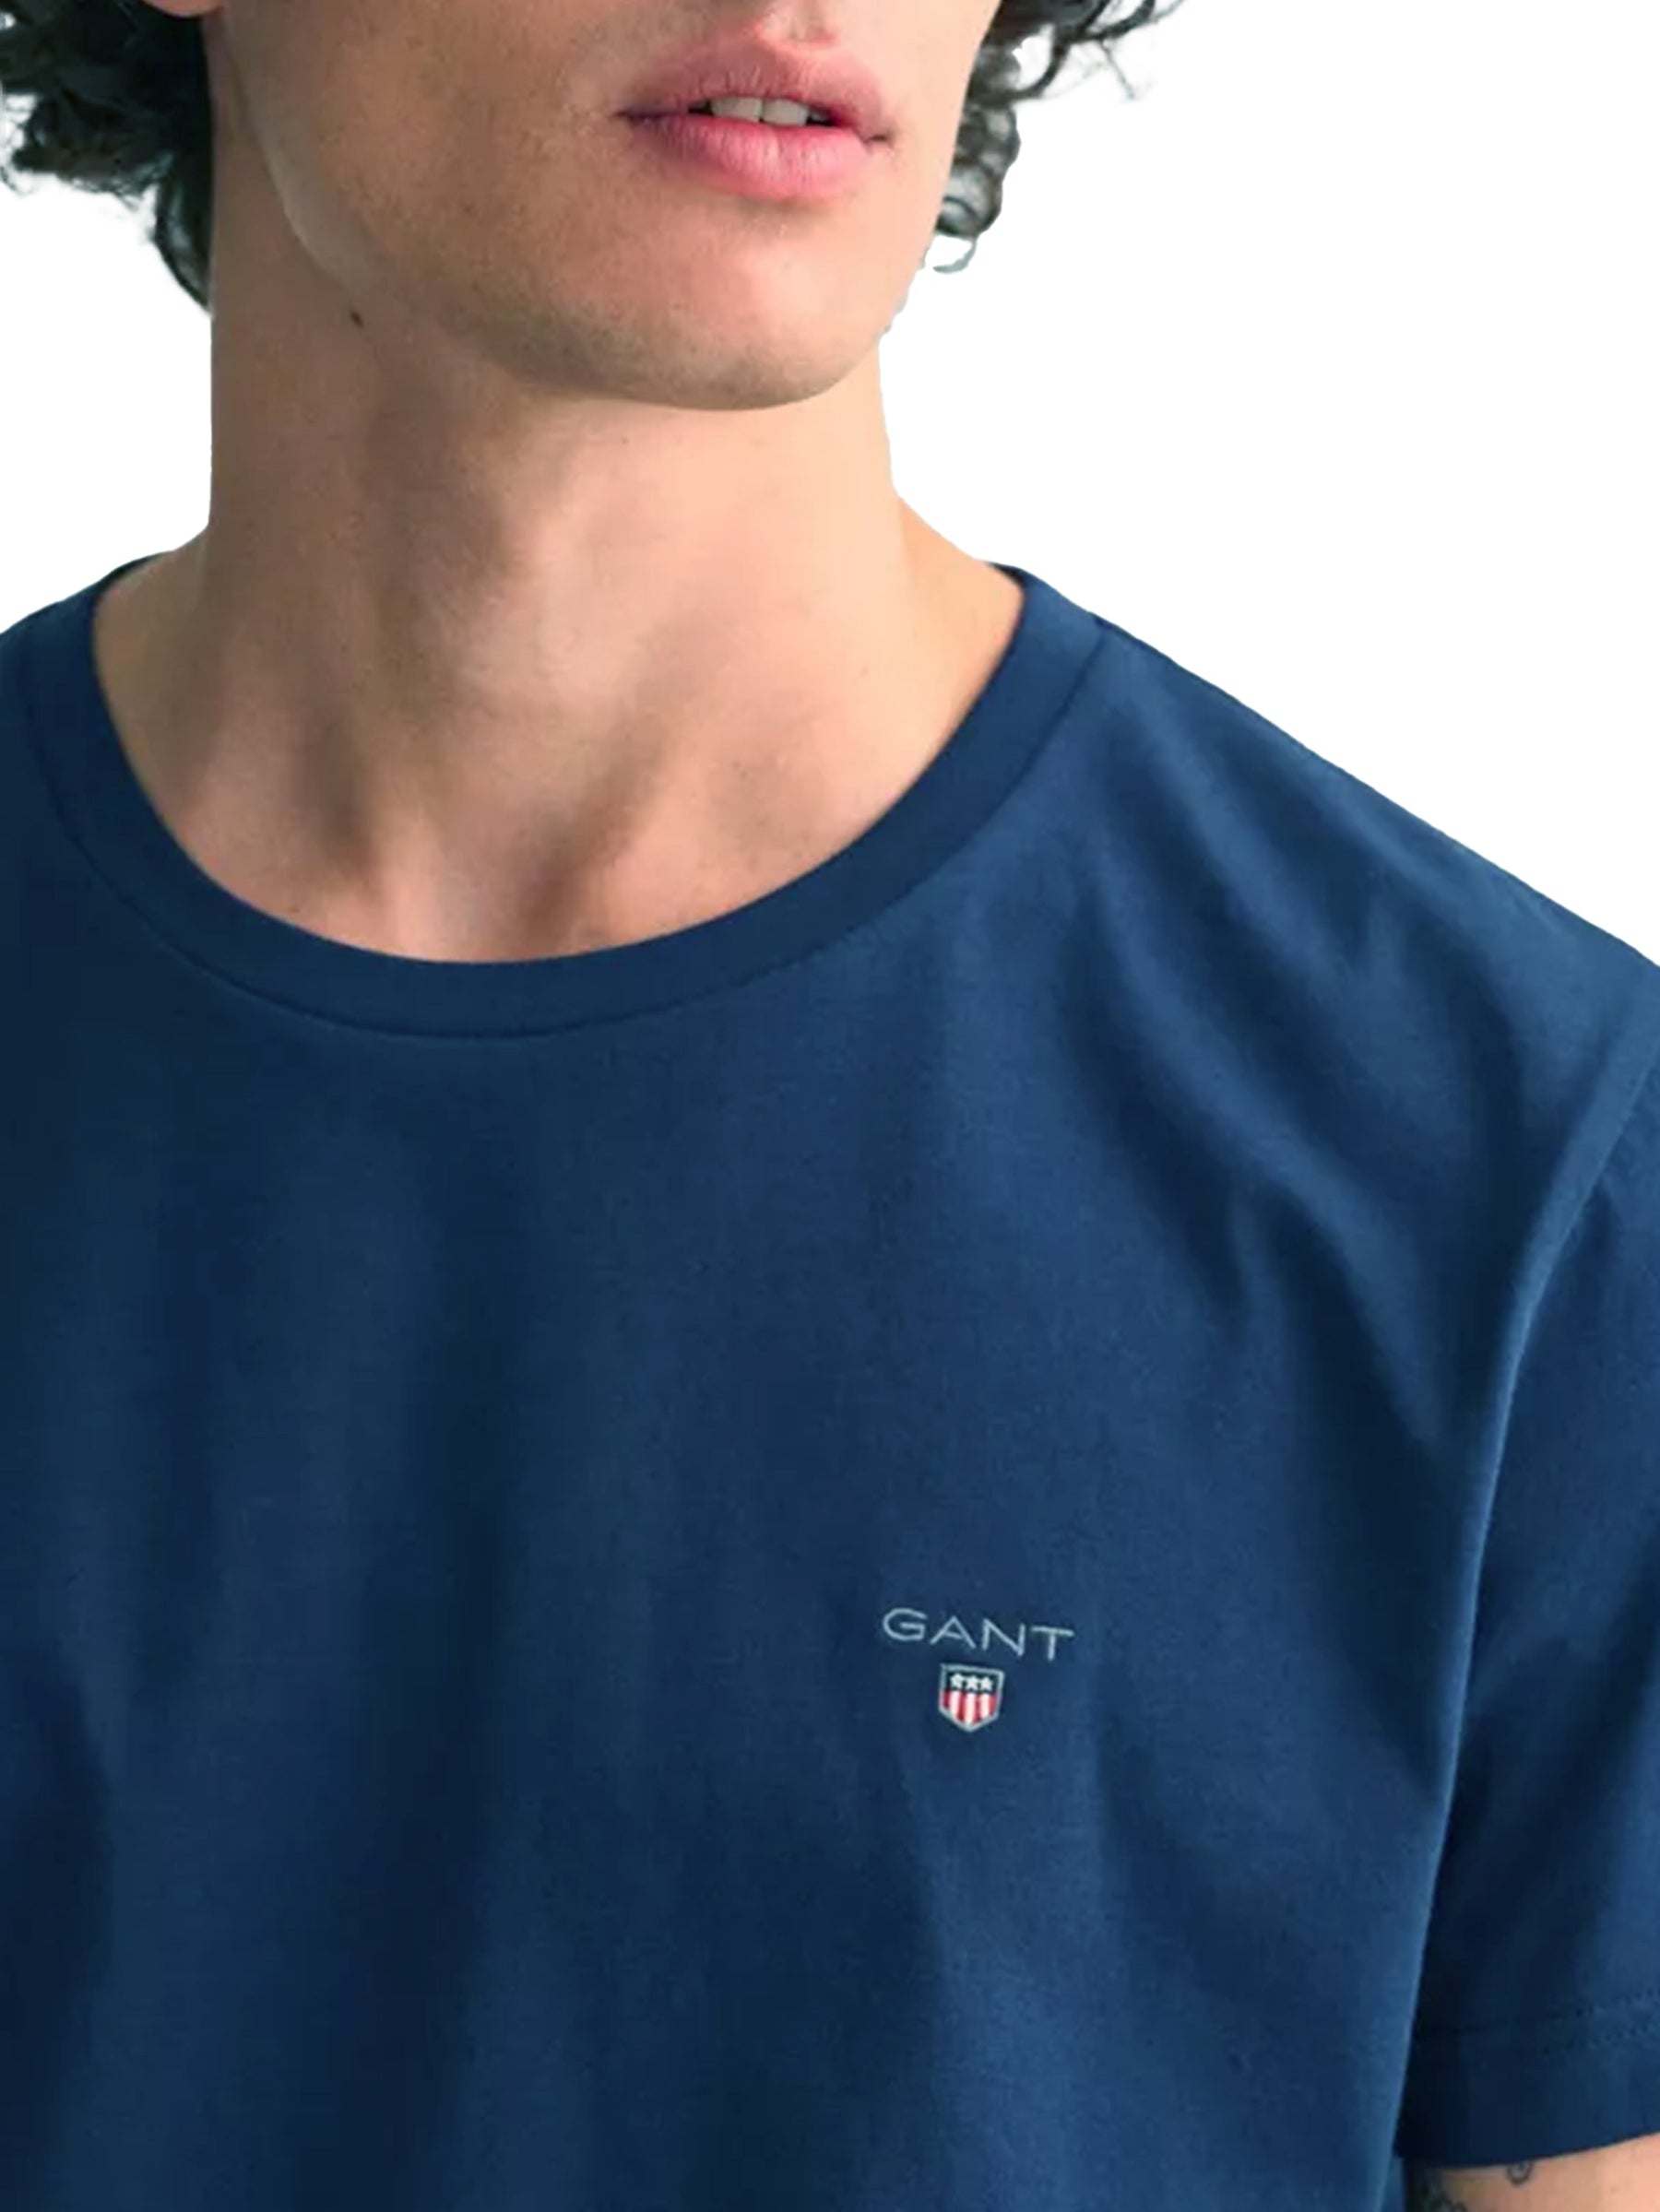 GANT TSHIRT 234100 Copy of Gant Mens T-Shirts GANT RAWDENIM